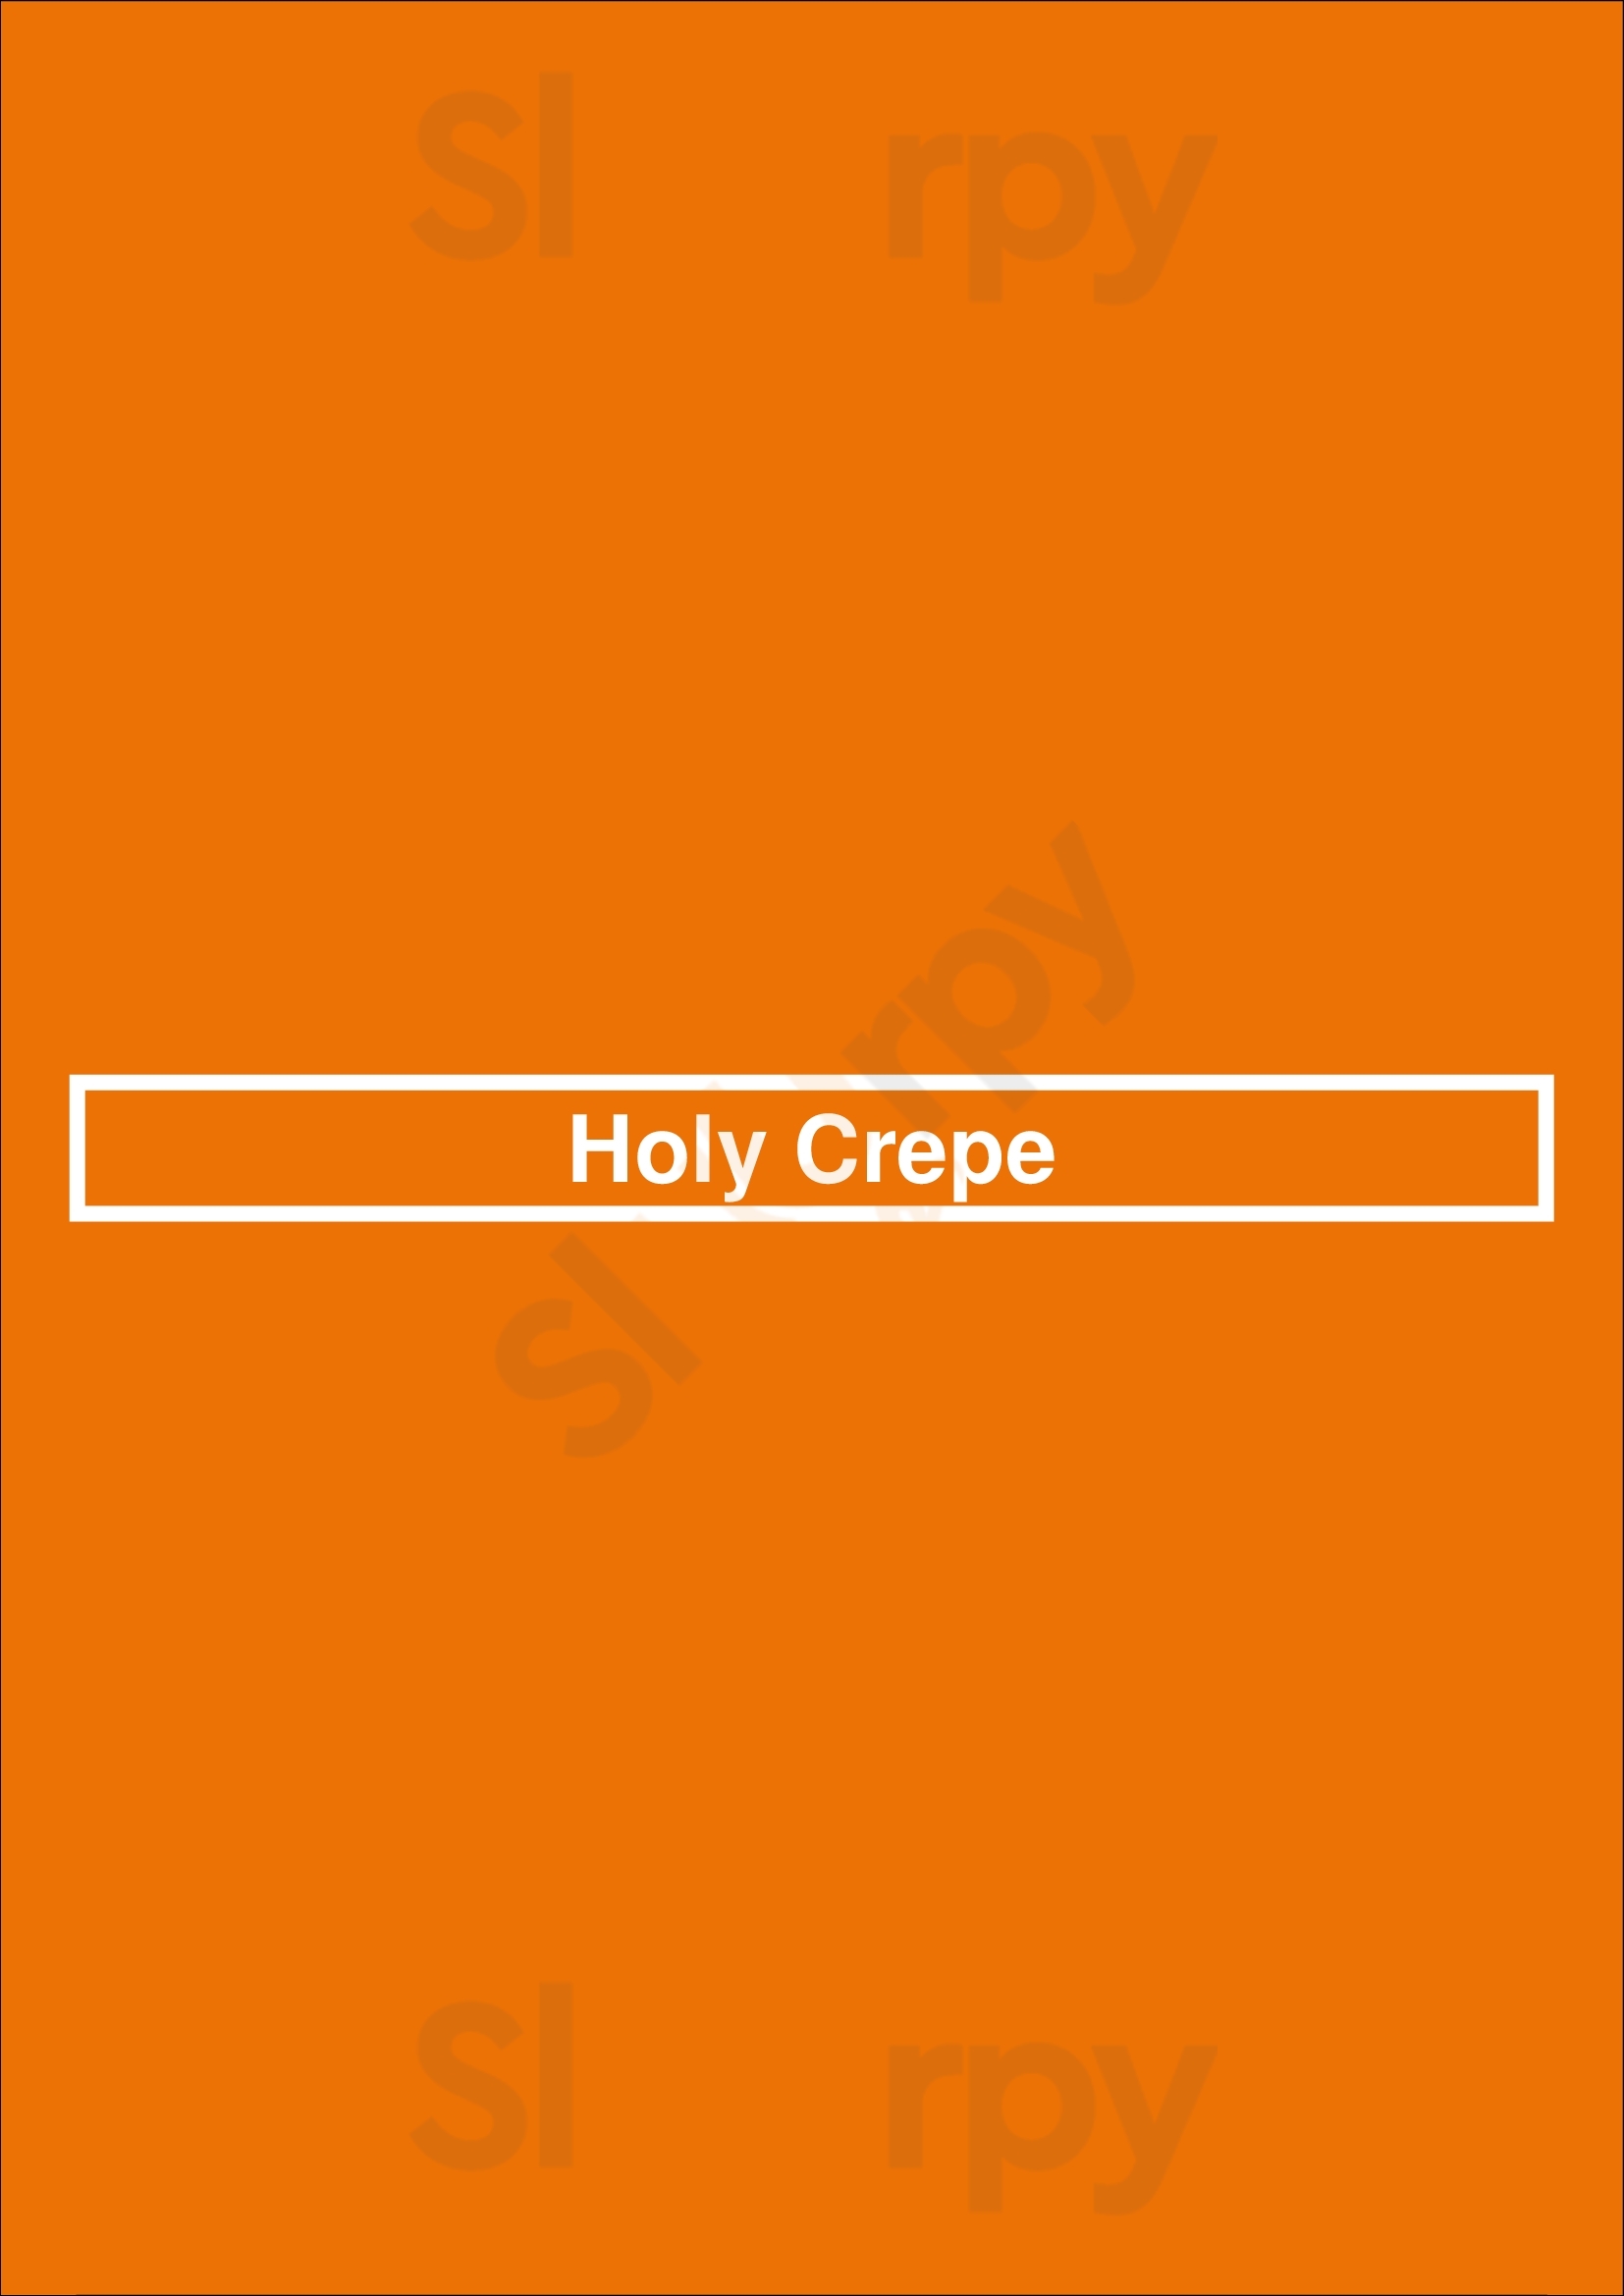 Holy Crepe São Paulo Menu - 1